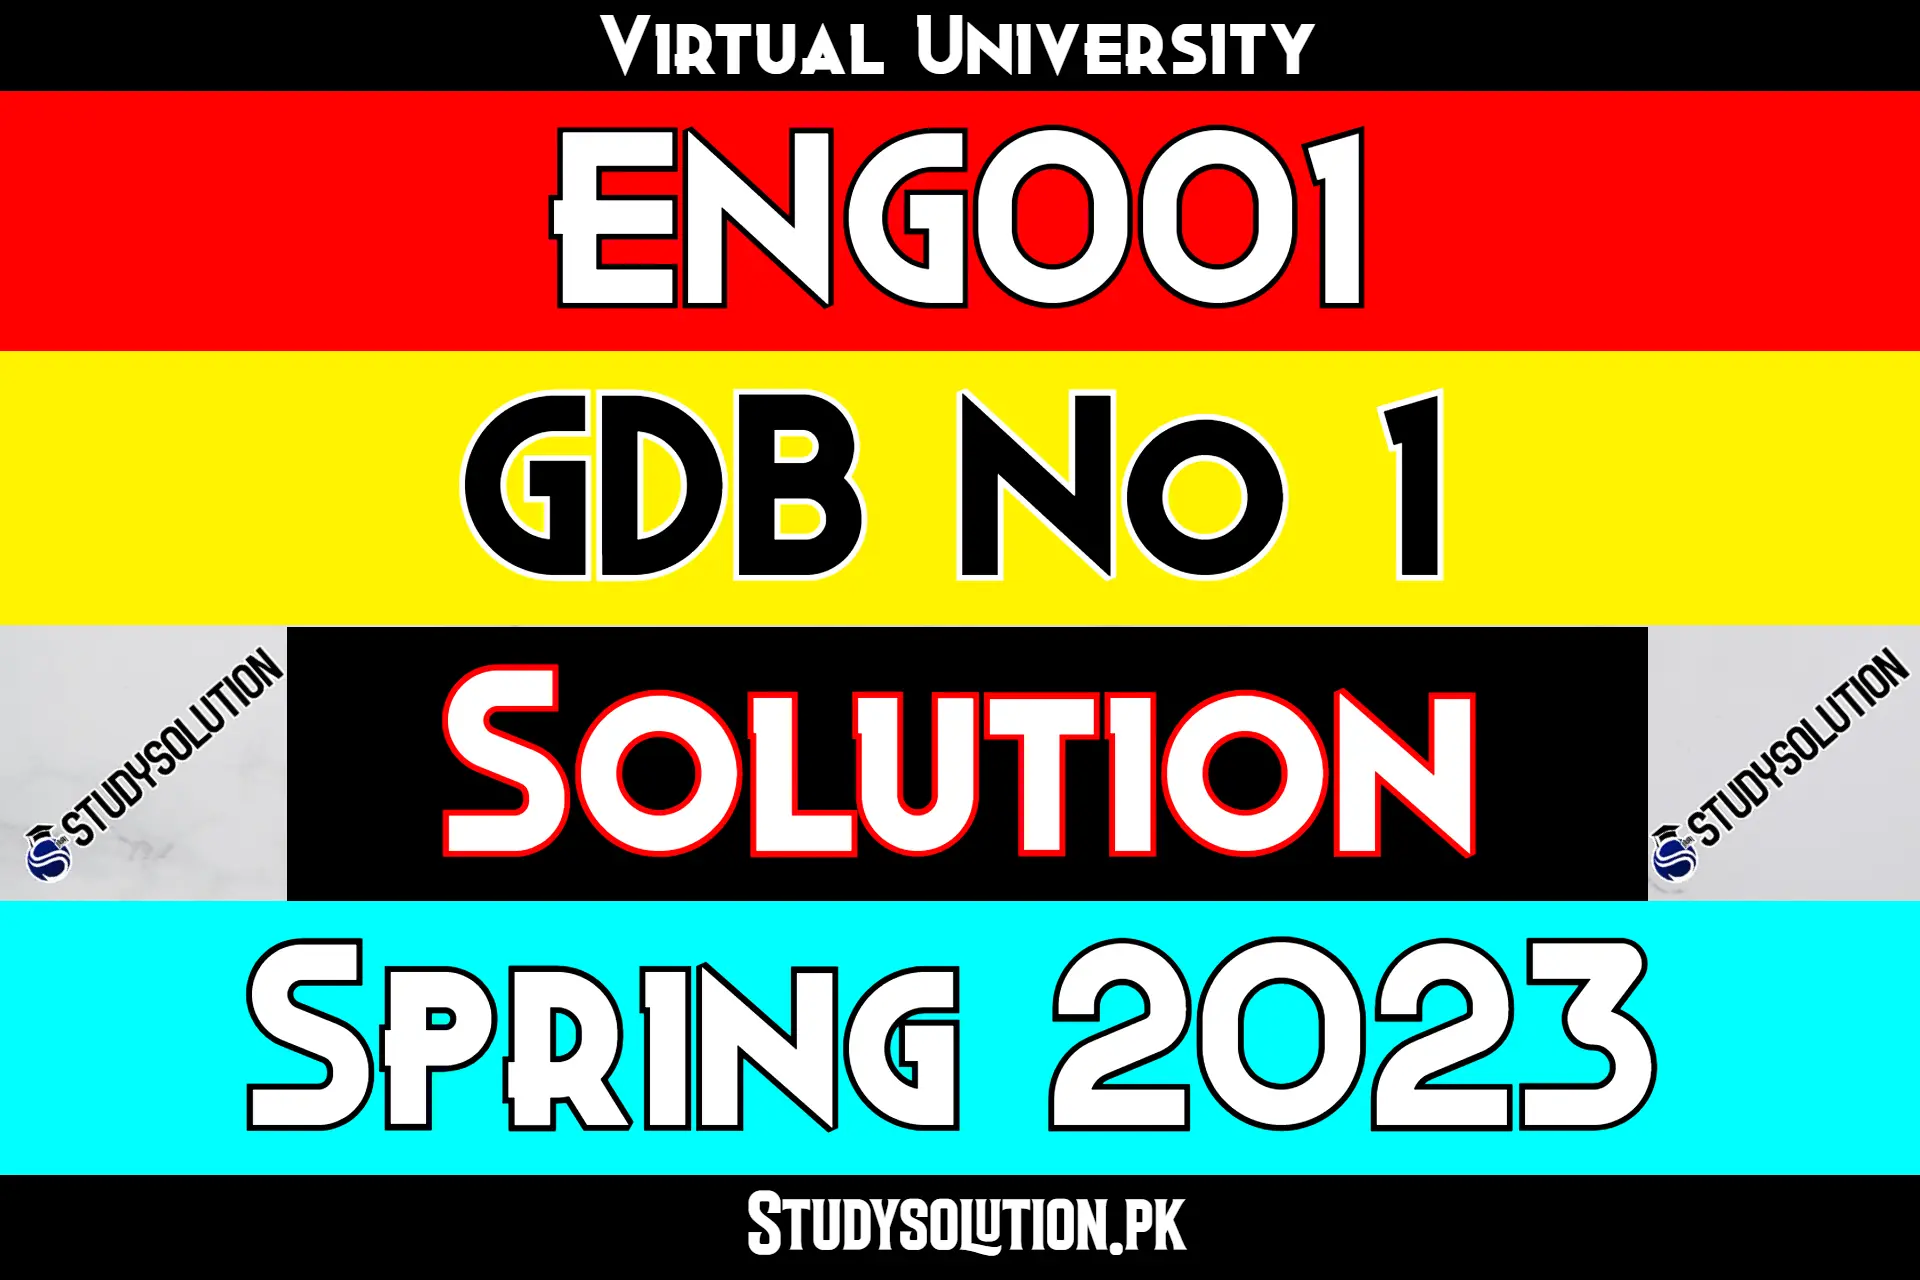 ENG001 GDB No 1 Solution Spring 2023